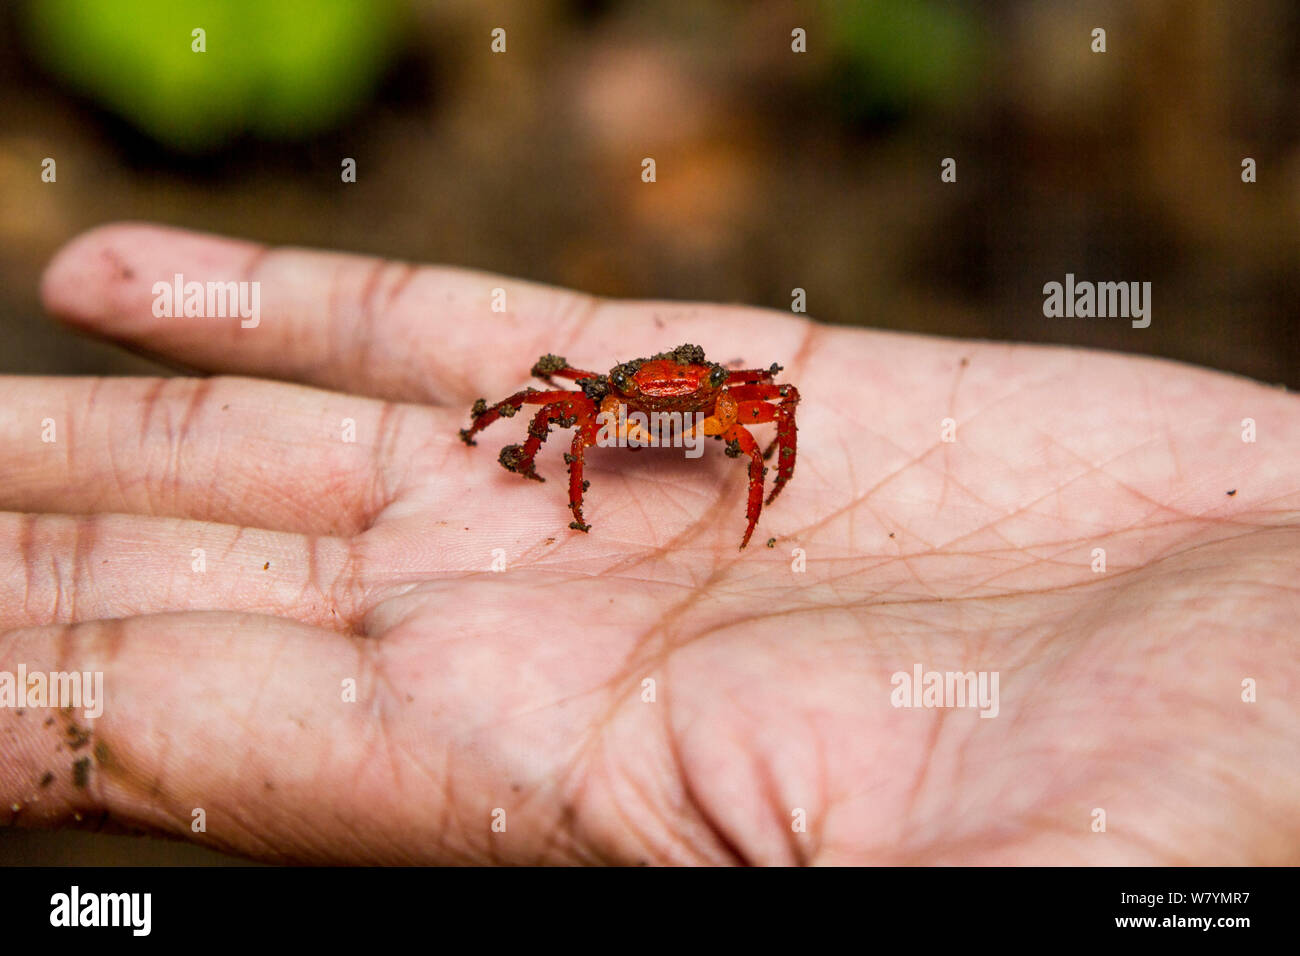 Mount Silam crab (Geosesarma aurantium), Mount Silam, Sabah, Borneo, Malaysia. Stock Photo